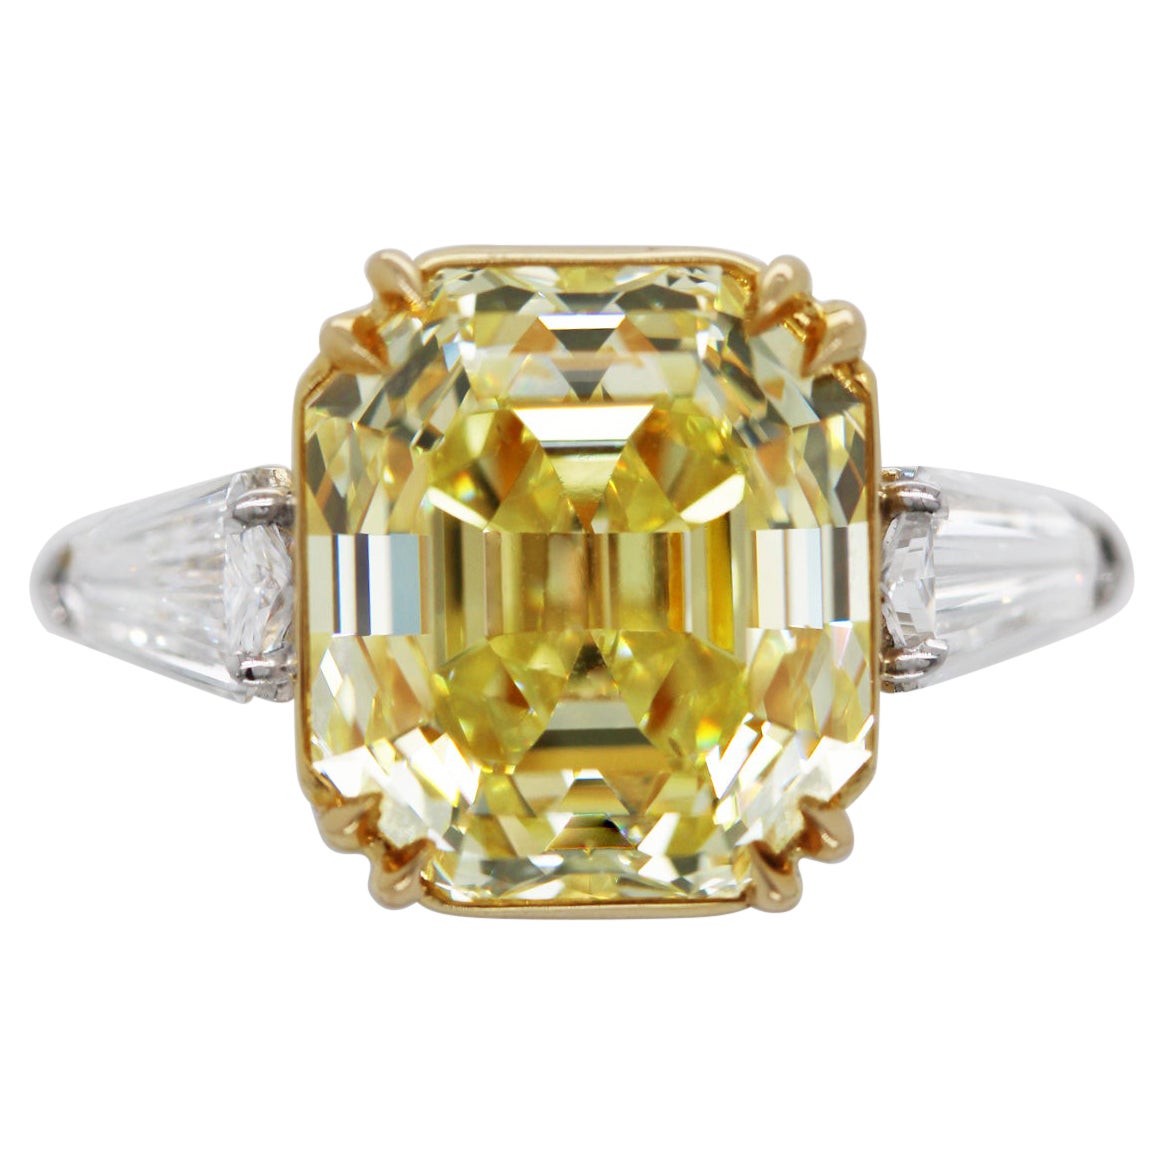 11.71 Ct IF Intense Yellow Emerald Cut Diamond Engagement Ring GIA Scarselli